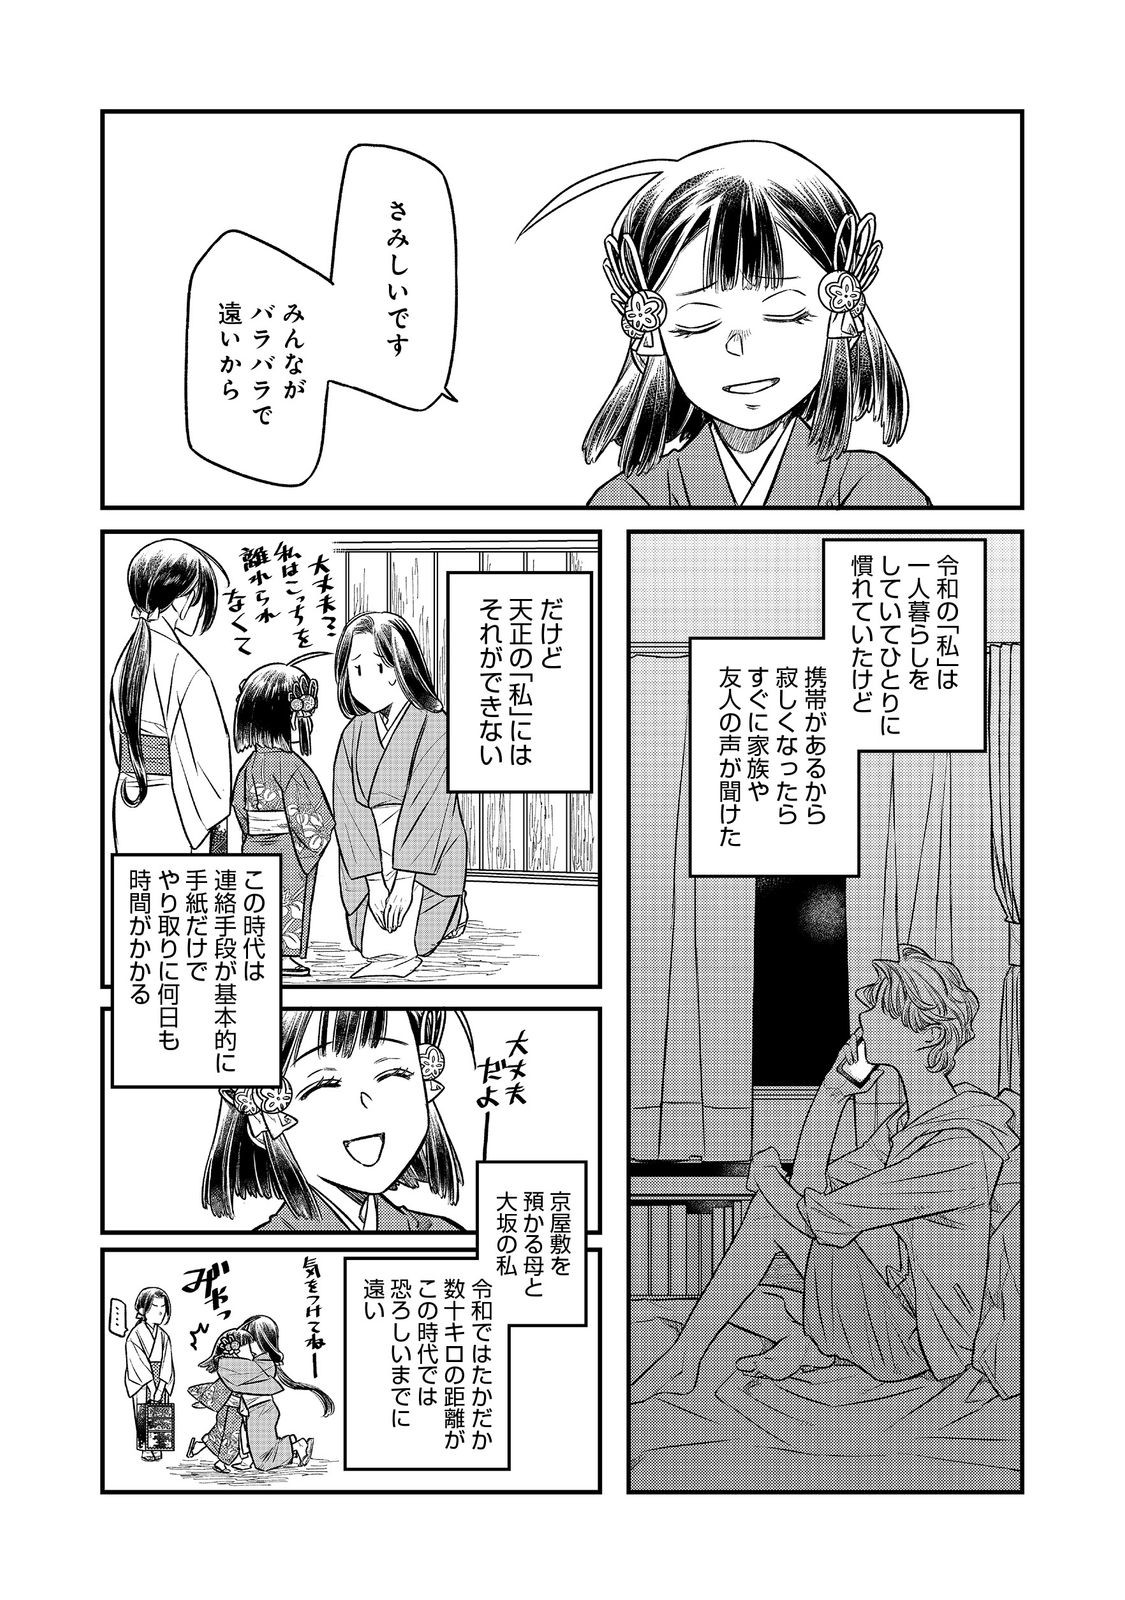 Kitanomandokoro-sama no Okeshougakari - Chapter 11.1 - Page 4